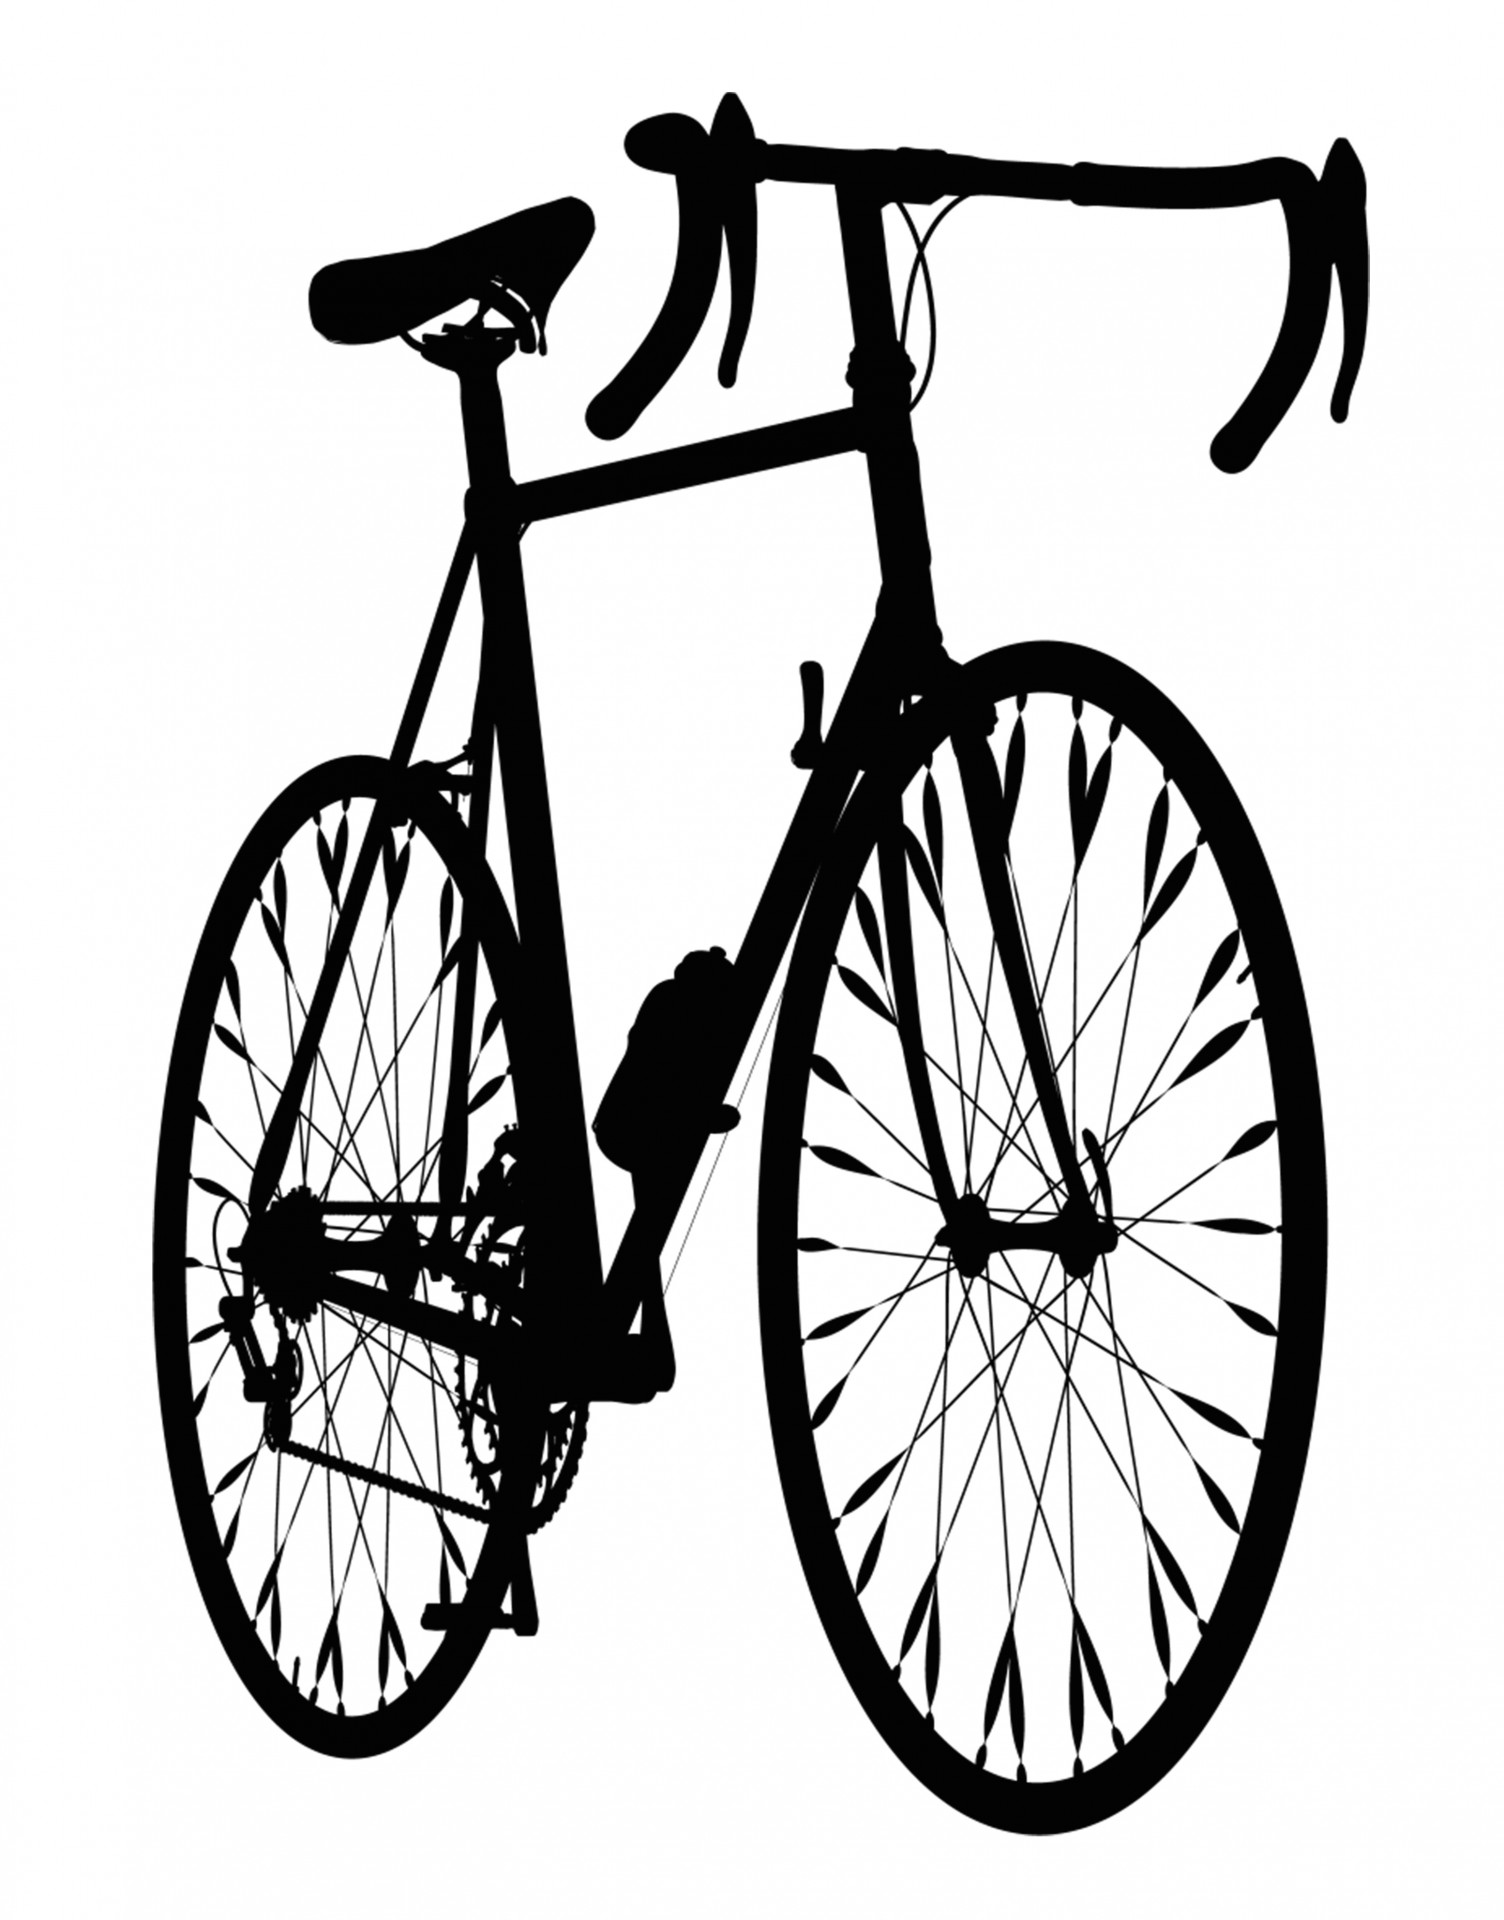 Berg Fahrrad-Schattenbild Kostenloses Stock Bild - Public Domain ...